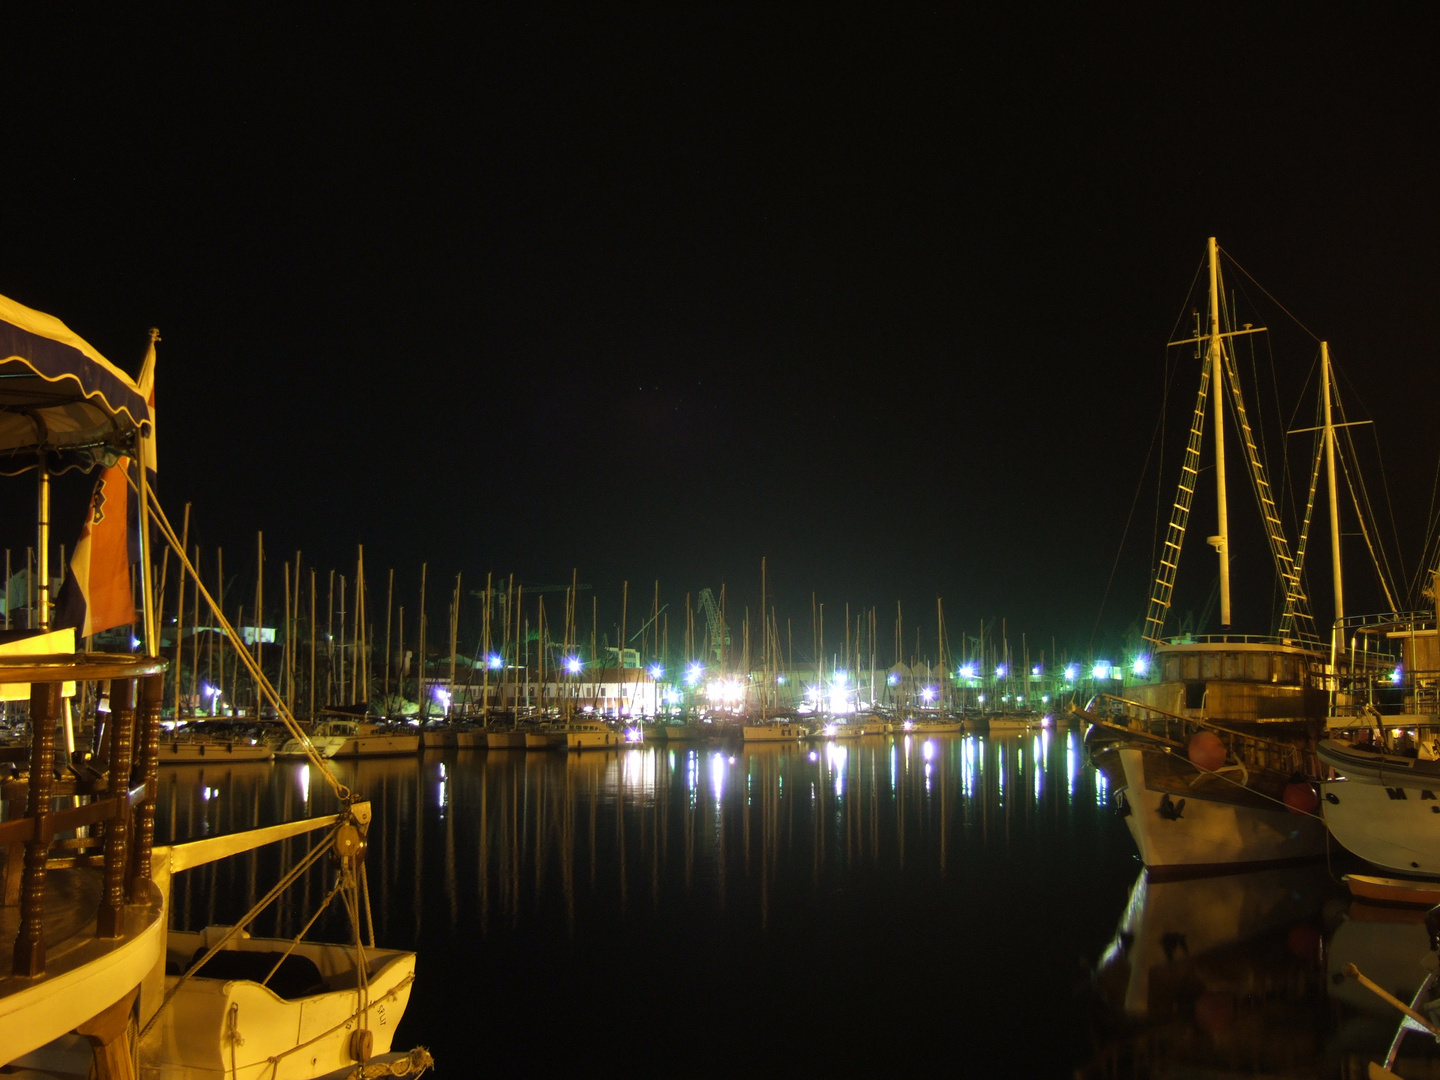 One night in Trogir